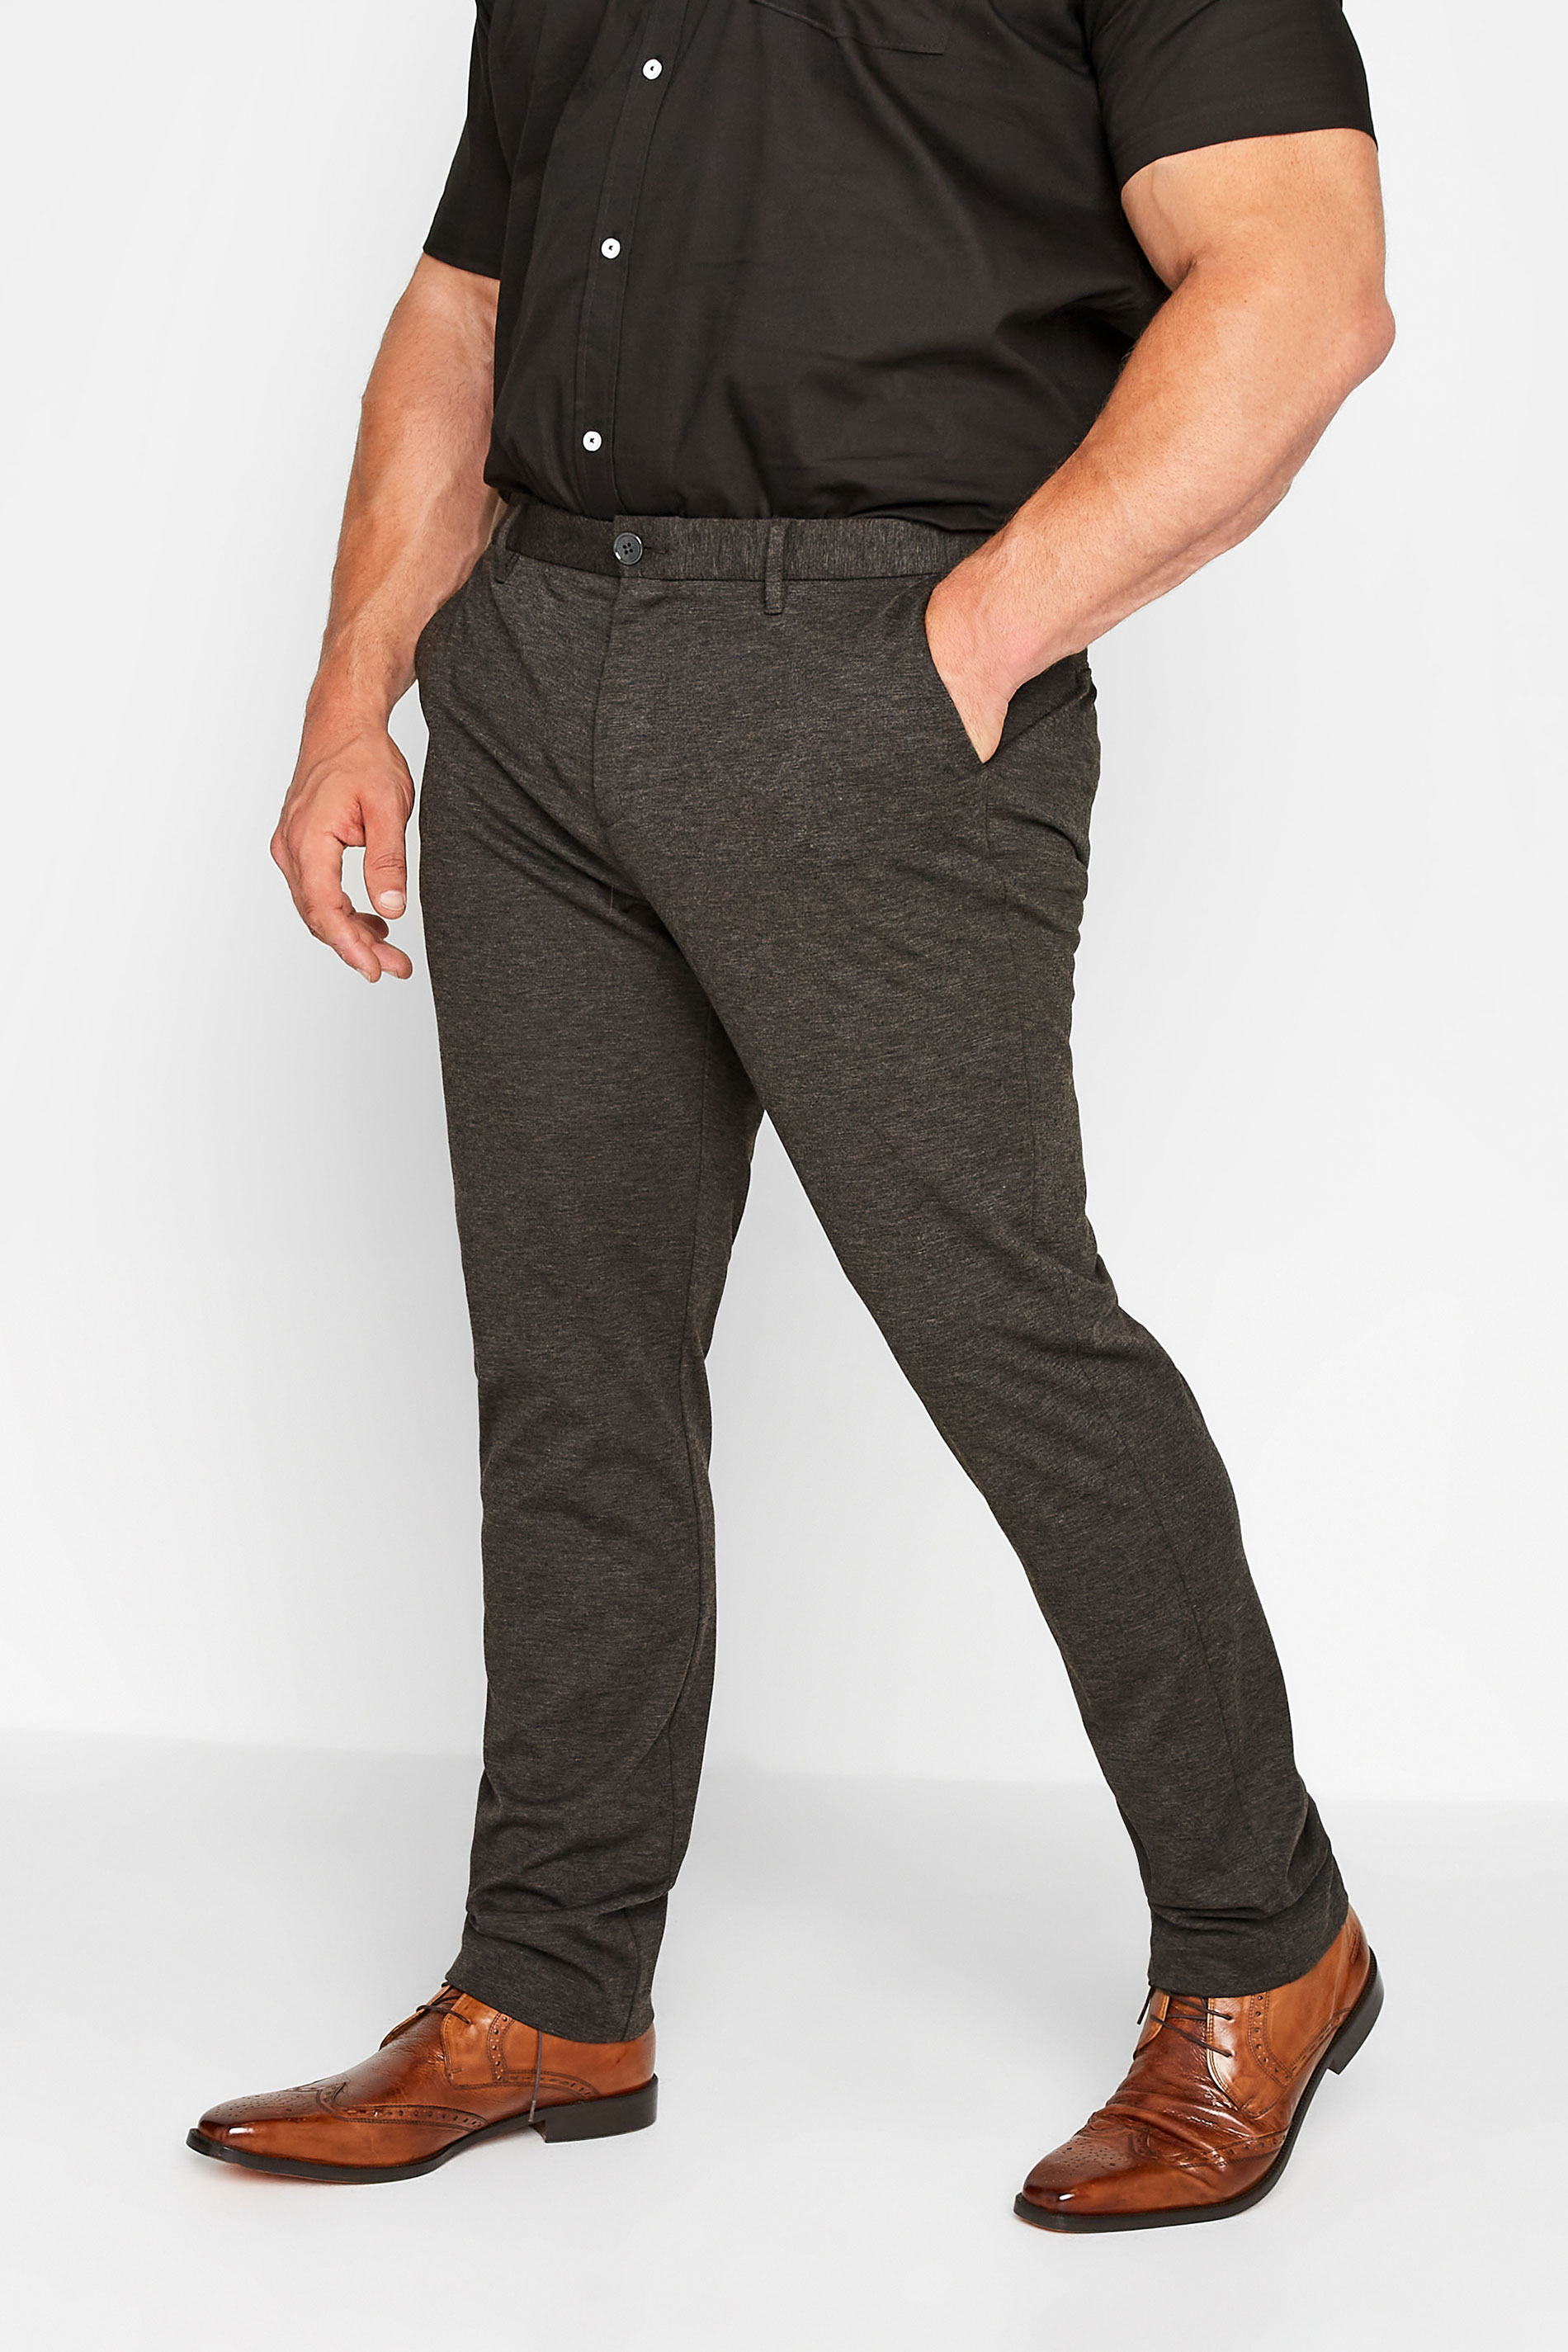 BadRhino Big & Tall Charcoal Grey Stretch Trousers 1